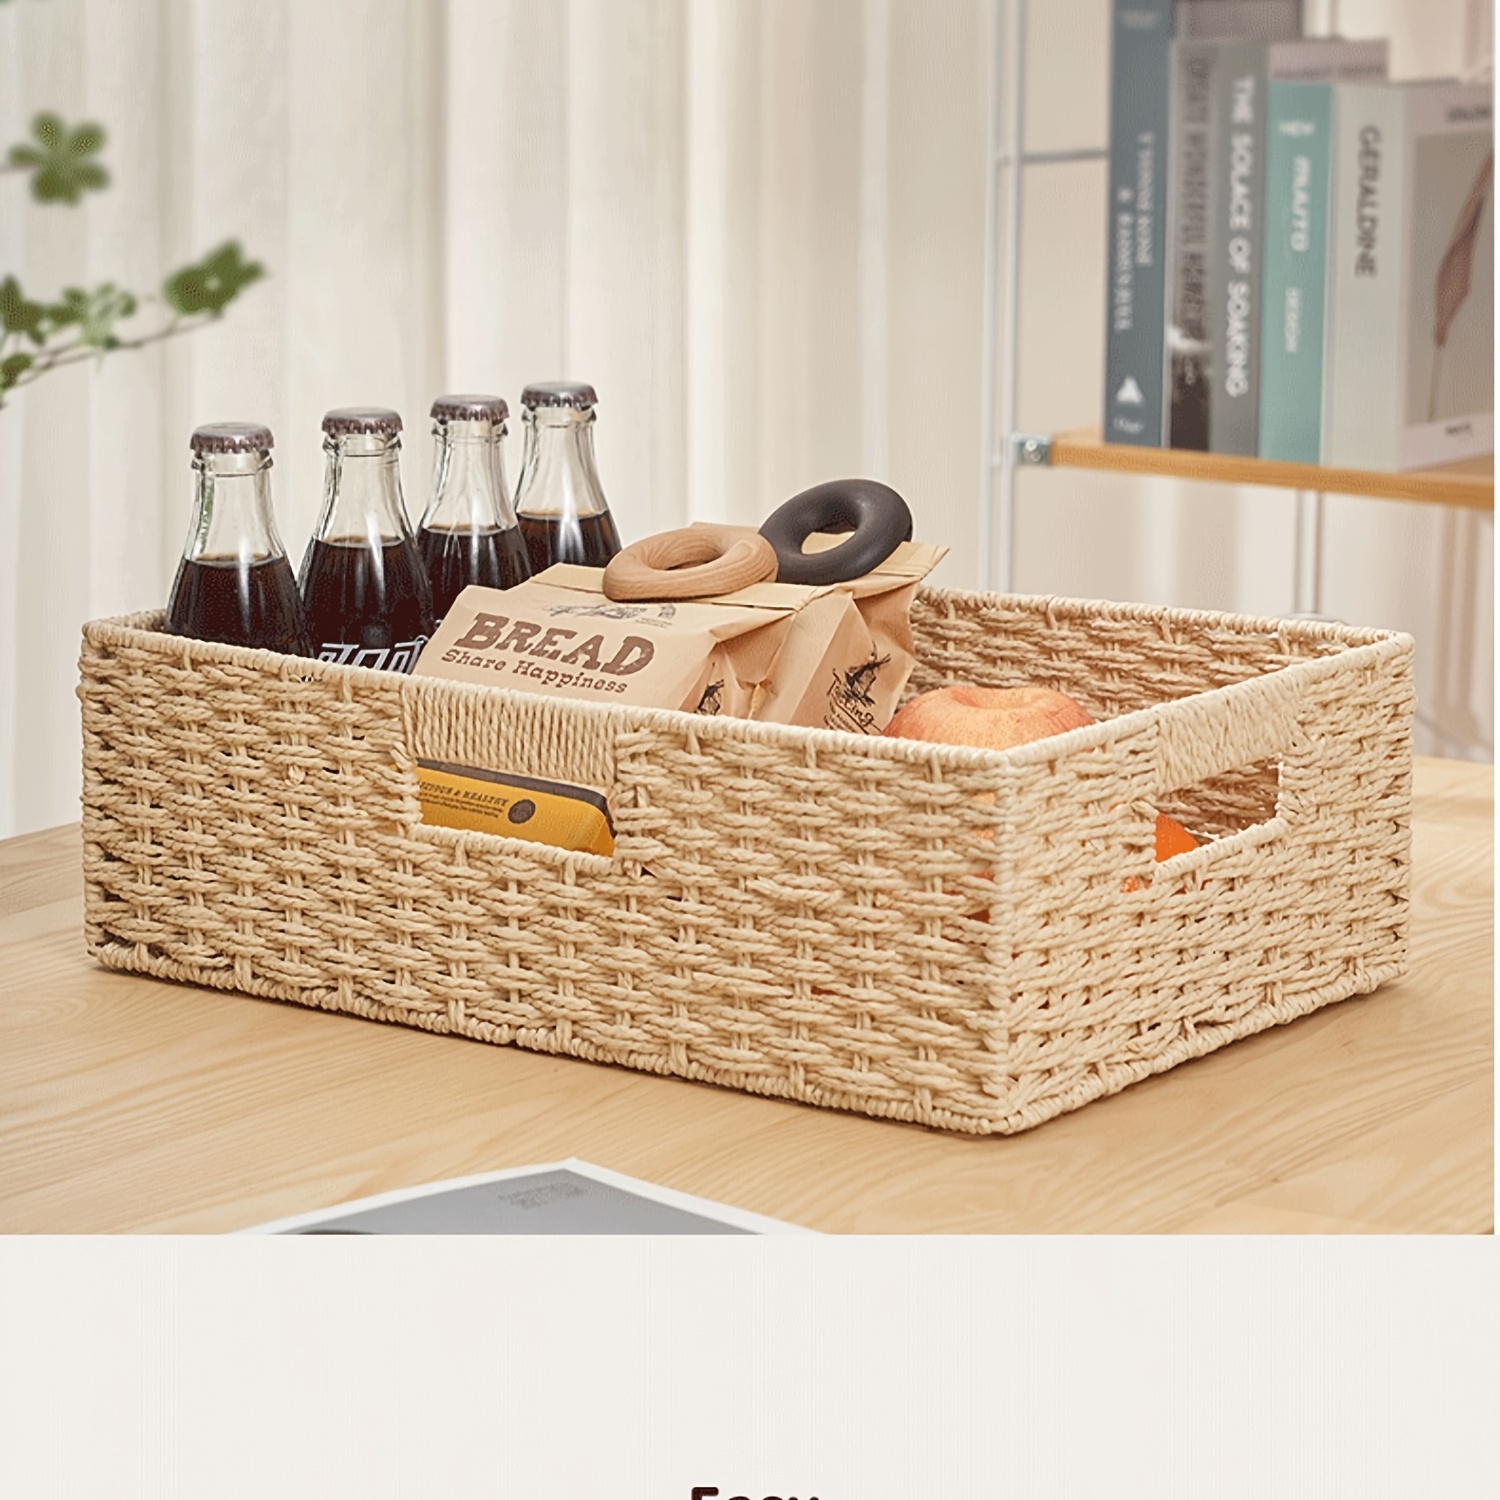 Wicker Storage Baskets for Shelves & Closets